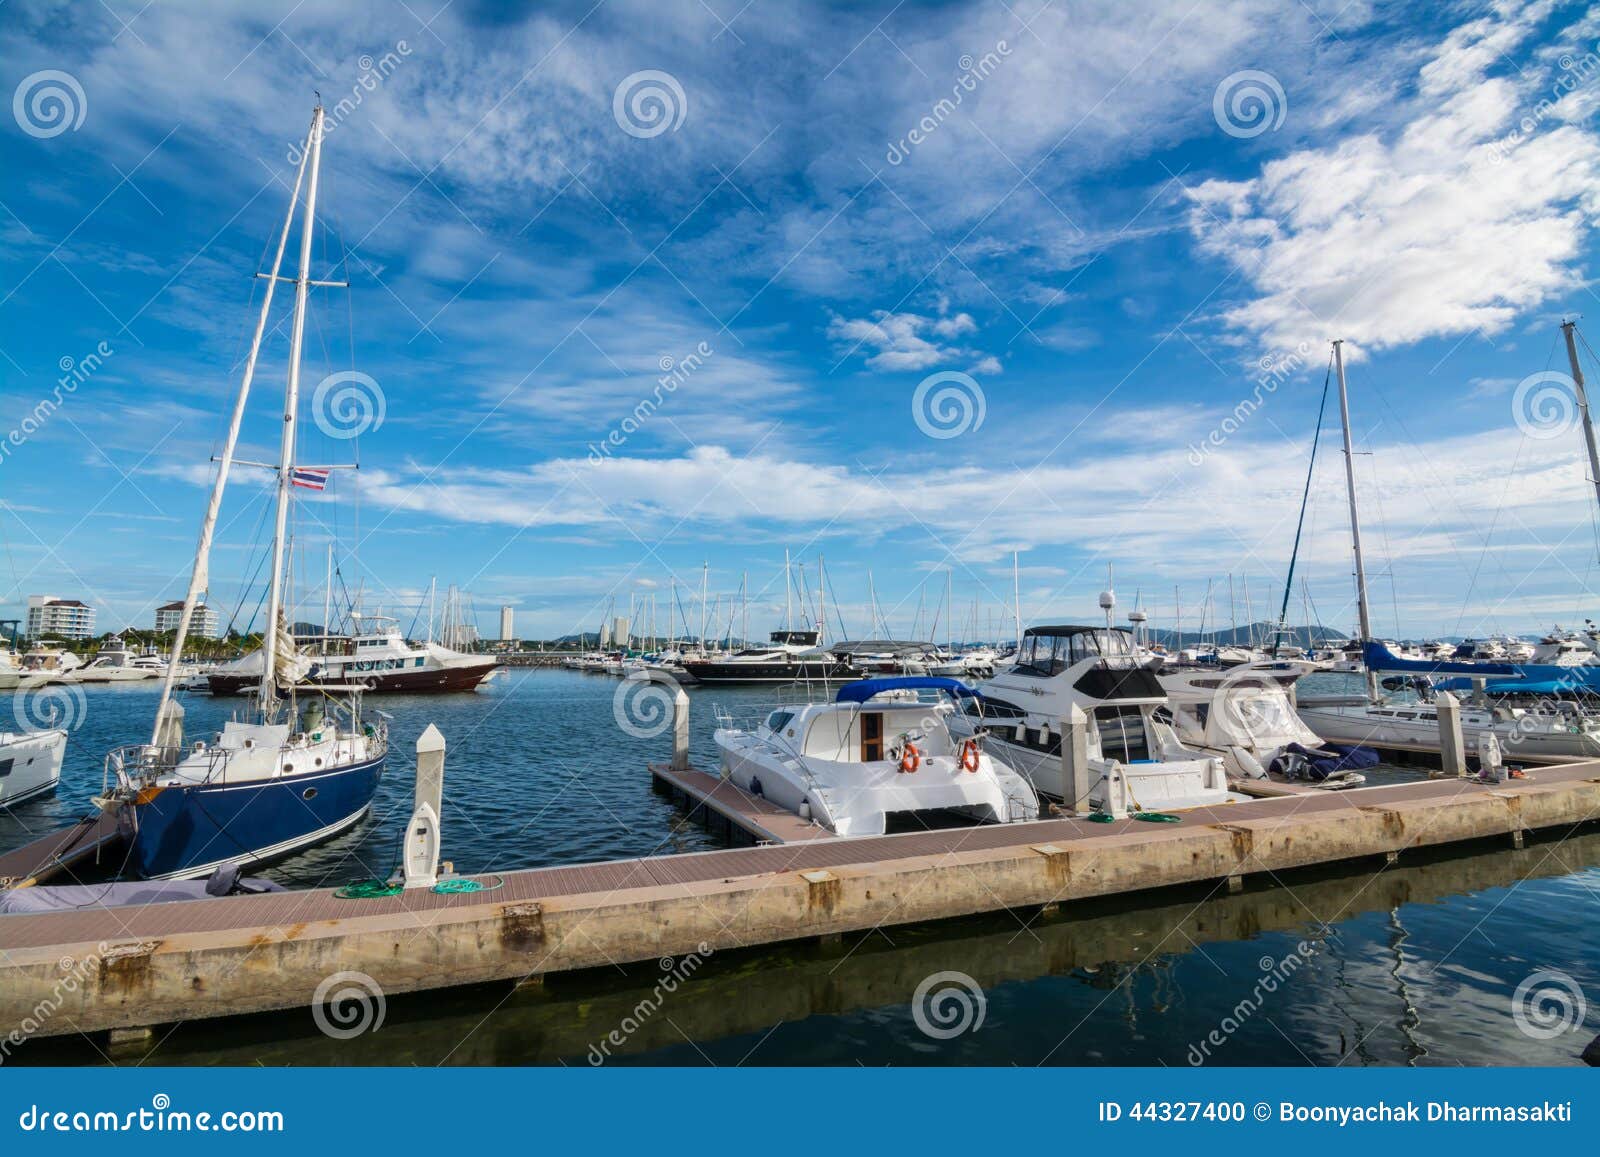 Port of yachts stock photo. Image of beautiful, fish - 44327400